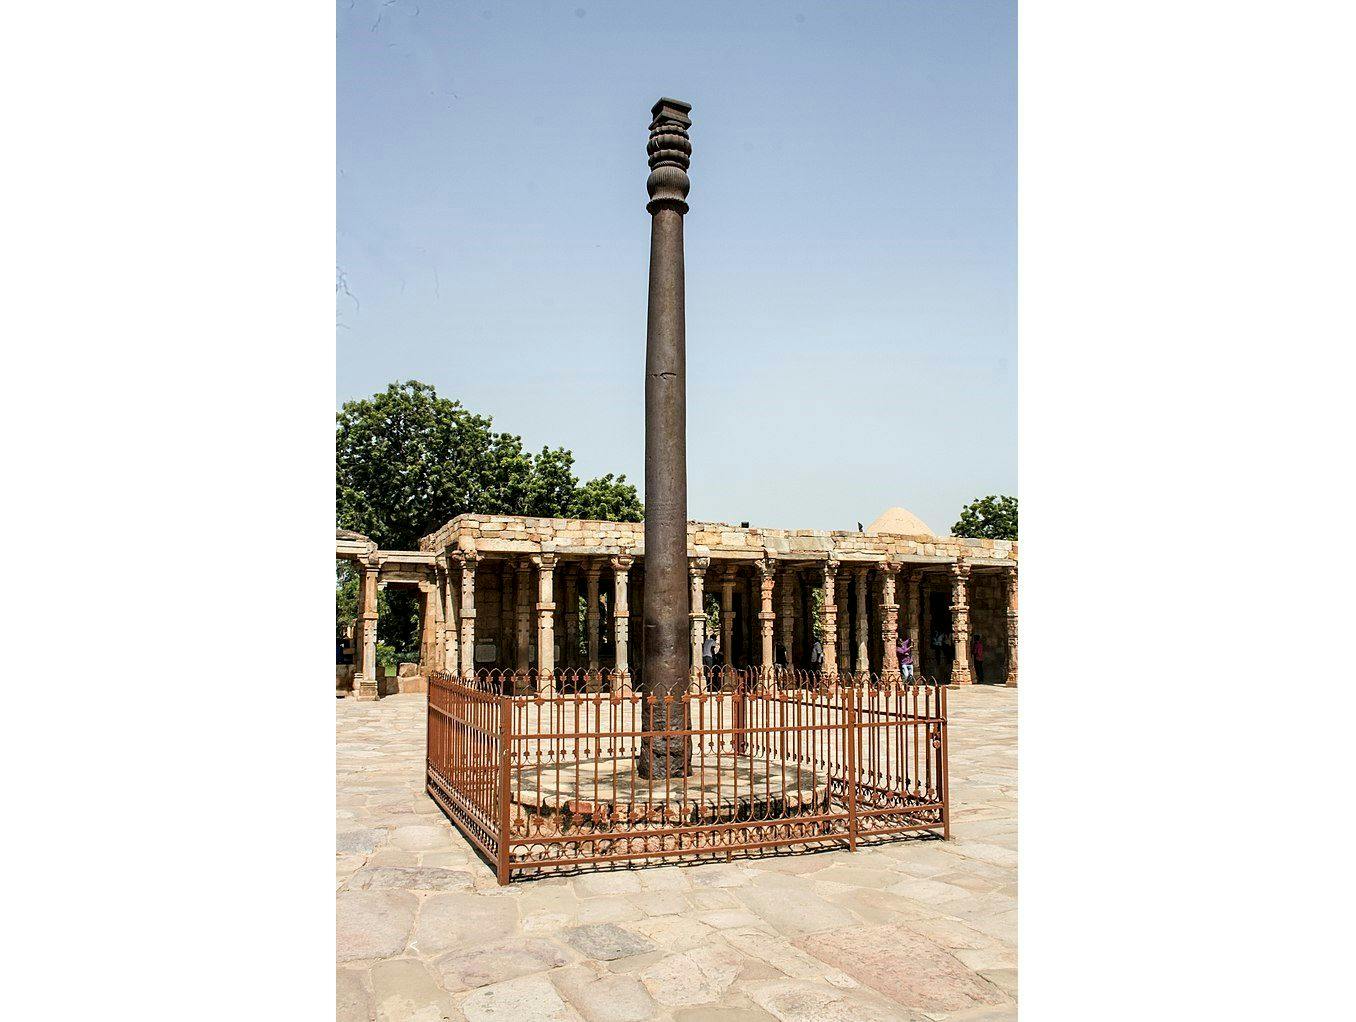 Iron pillar in the complex